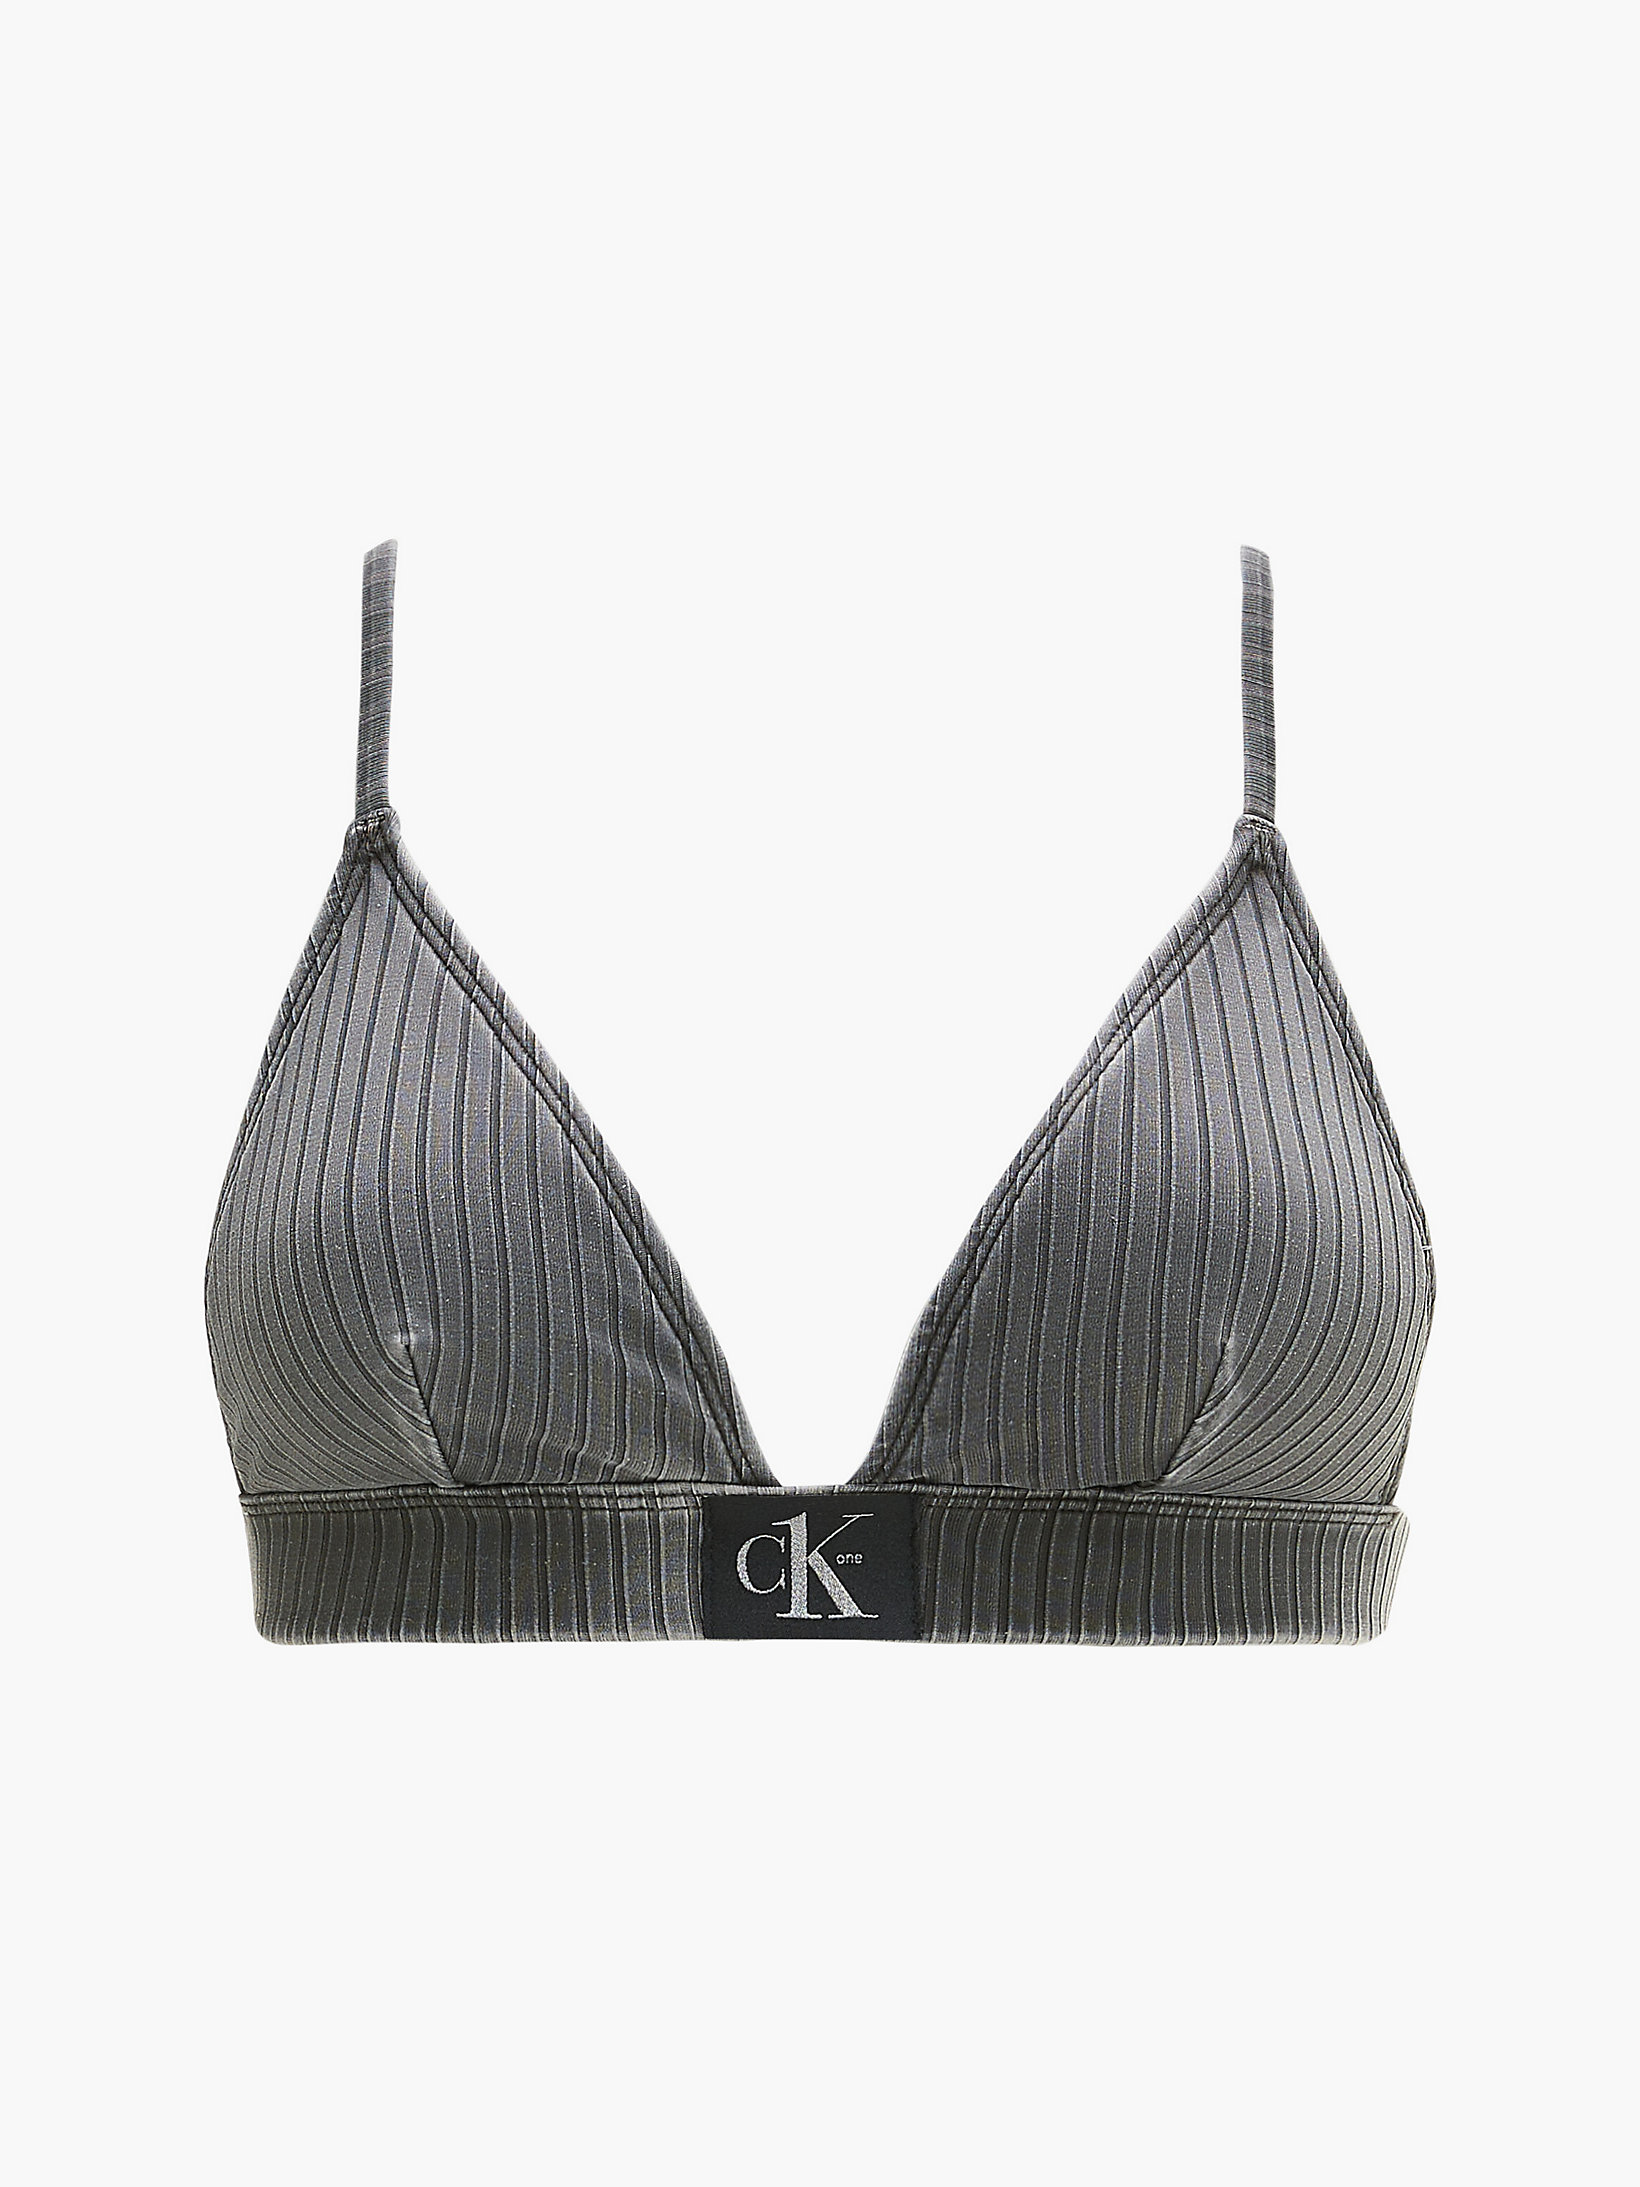 Pvh Black Triangle Bikini Top - CK Authentic undefined women Calvin Klein